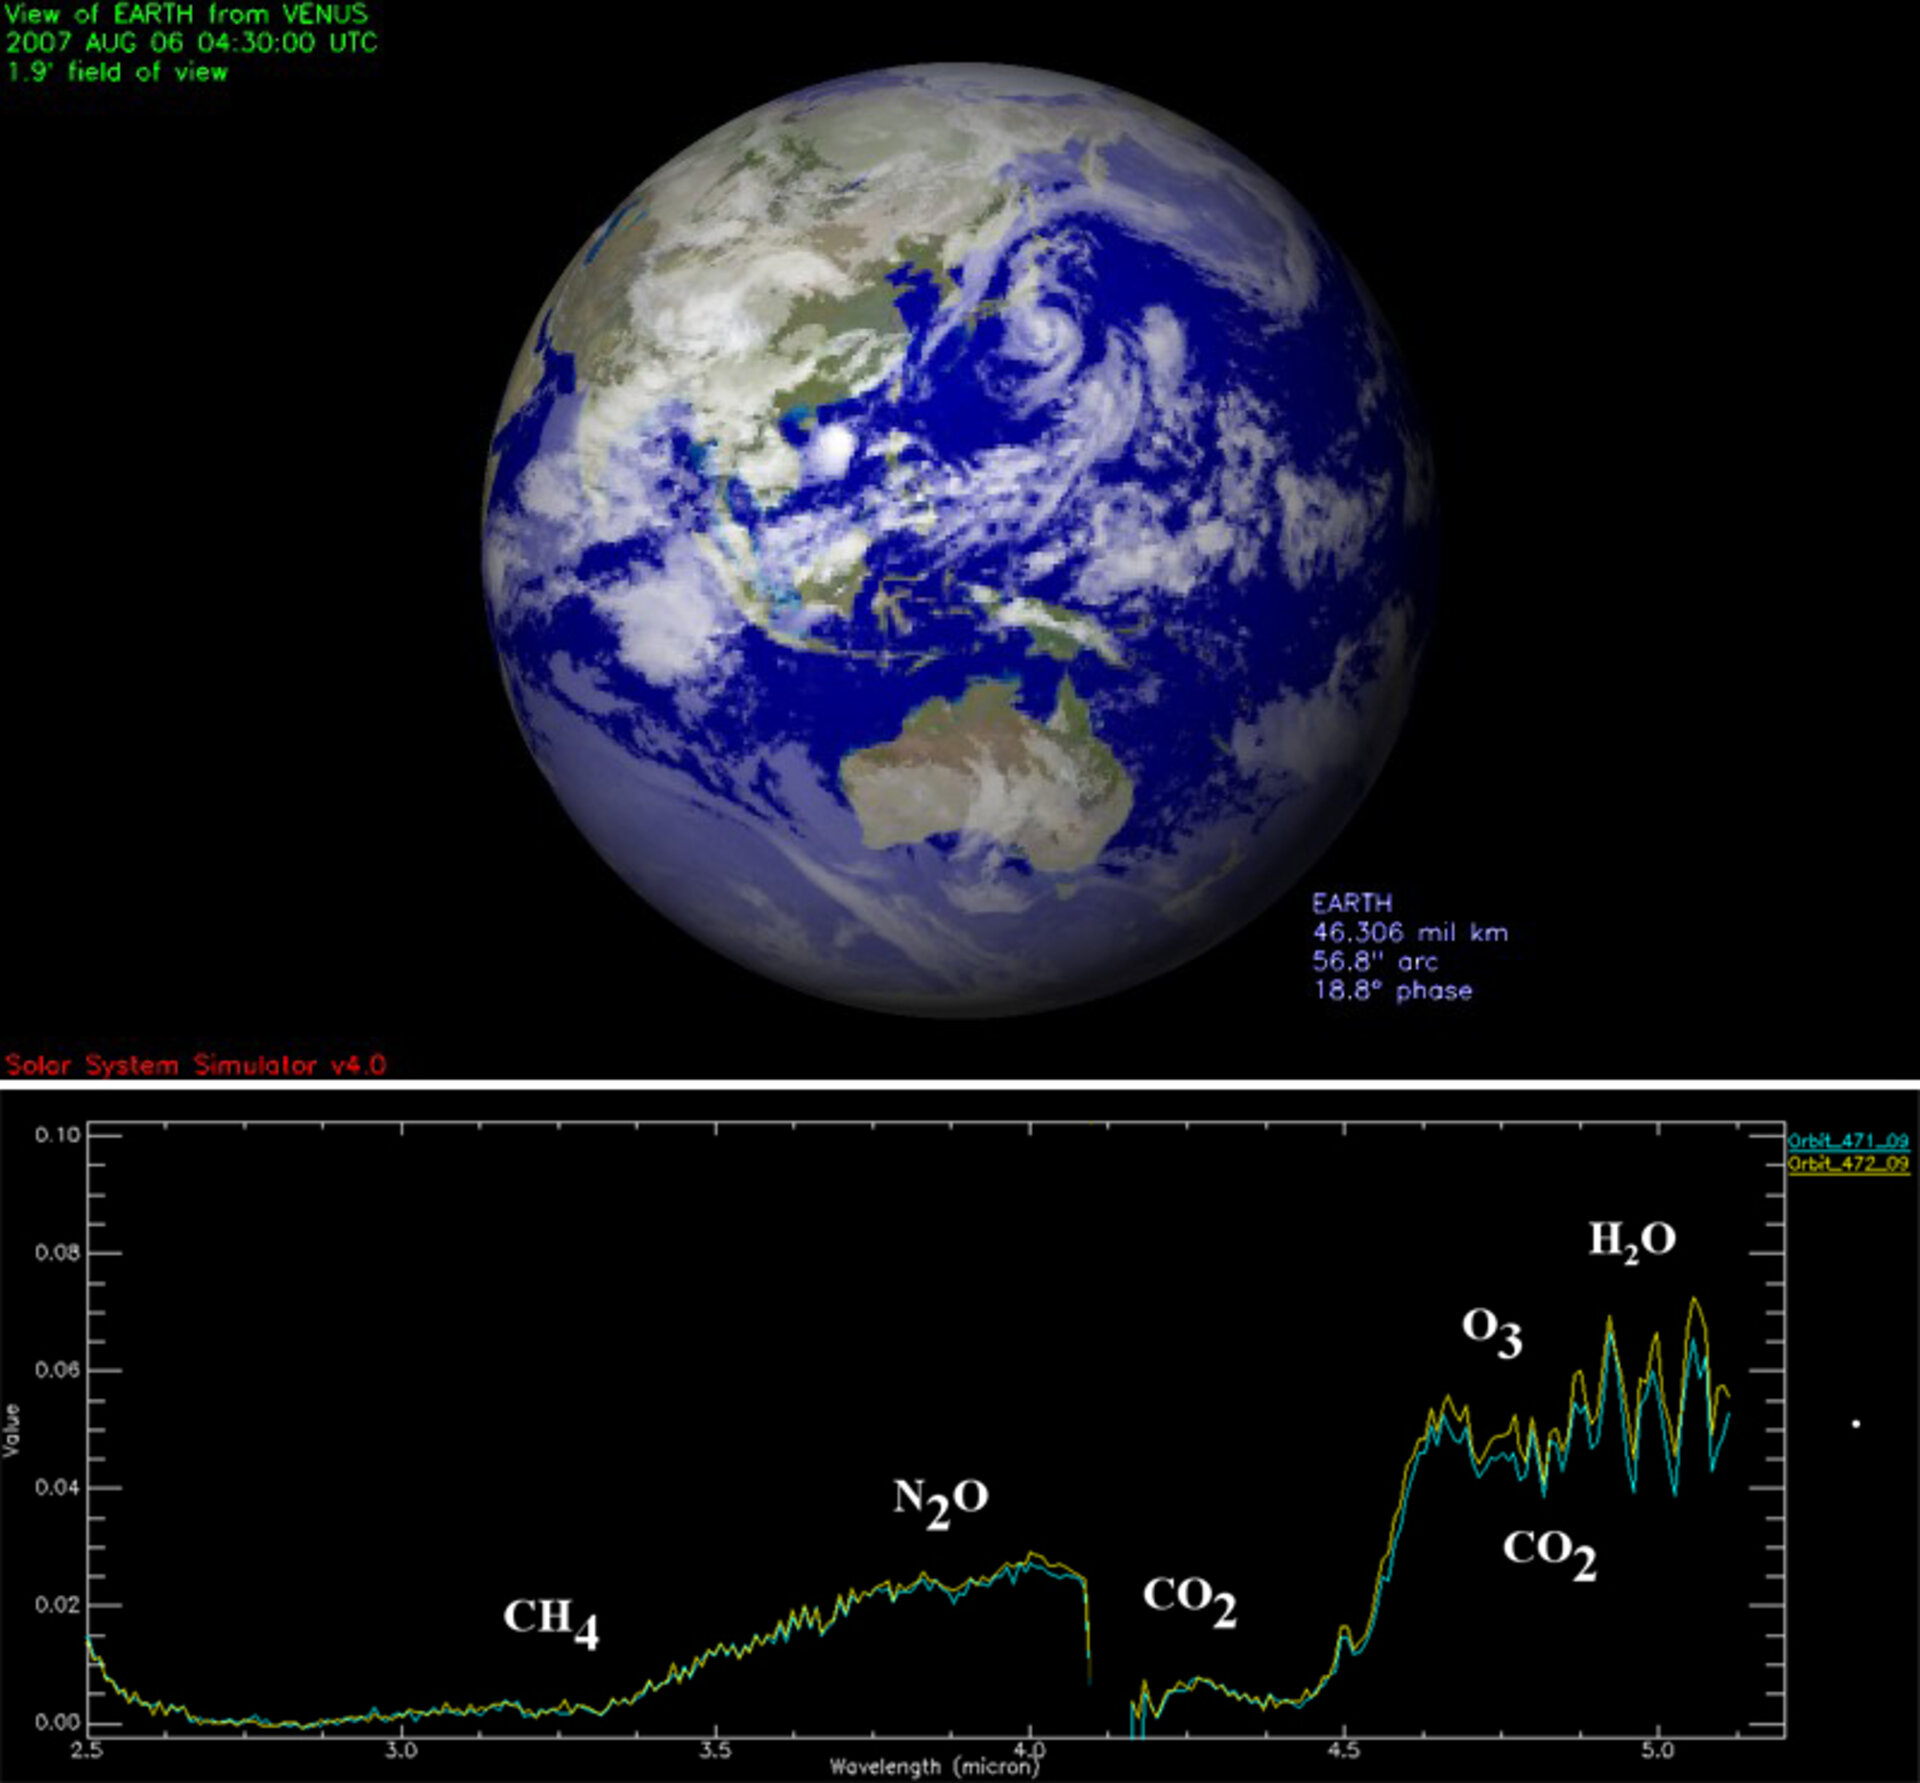 Earth atmosphere’s molecules detected by Venus Express